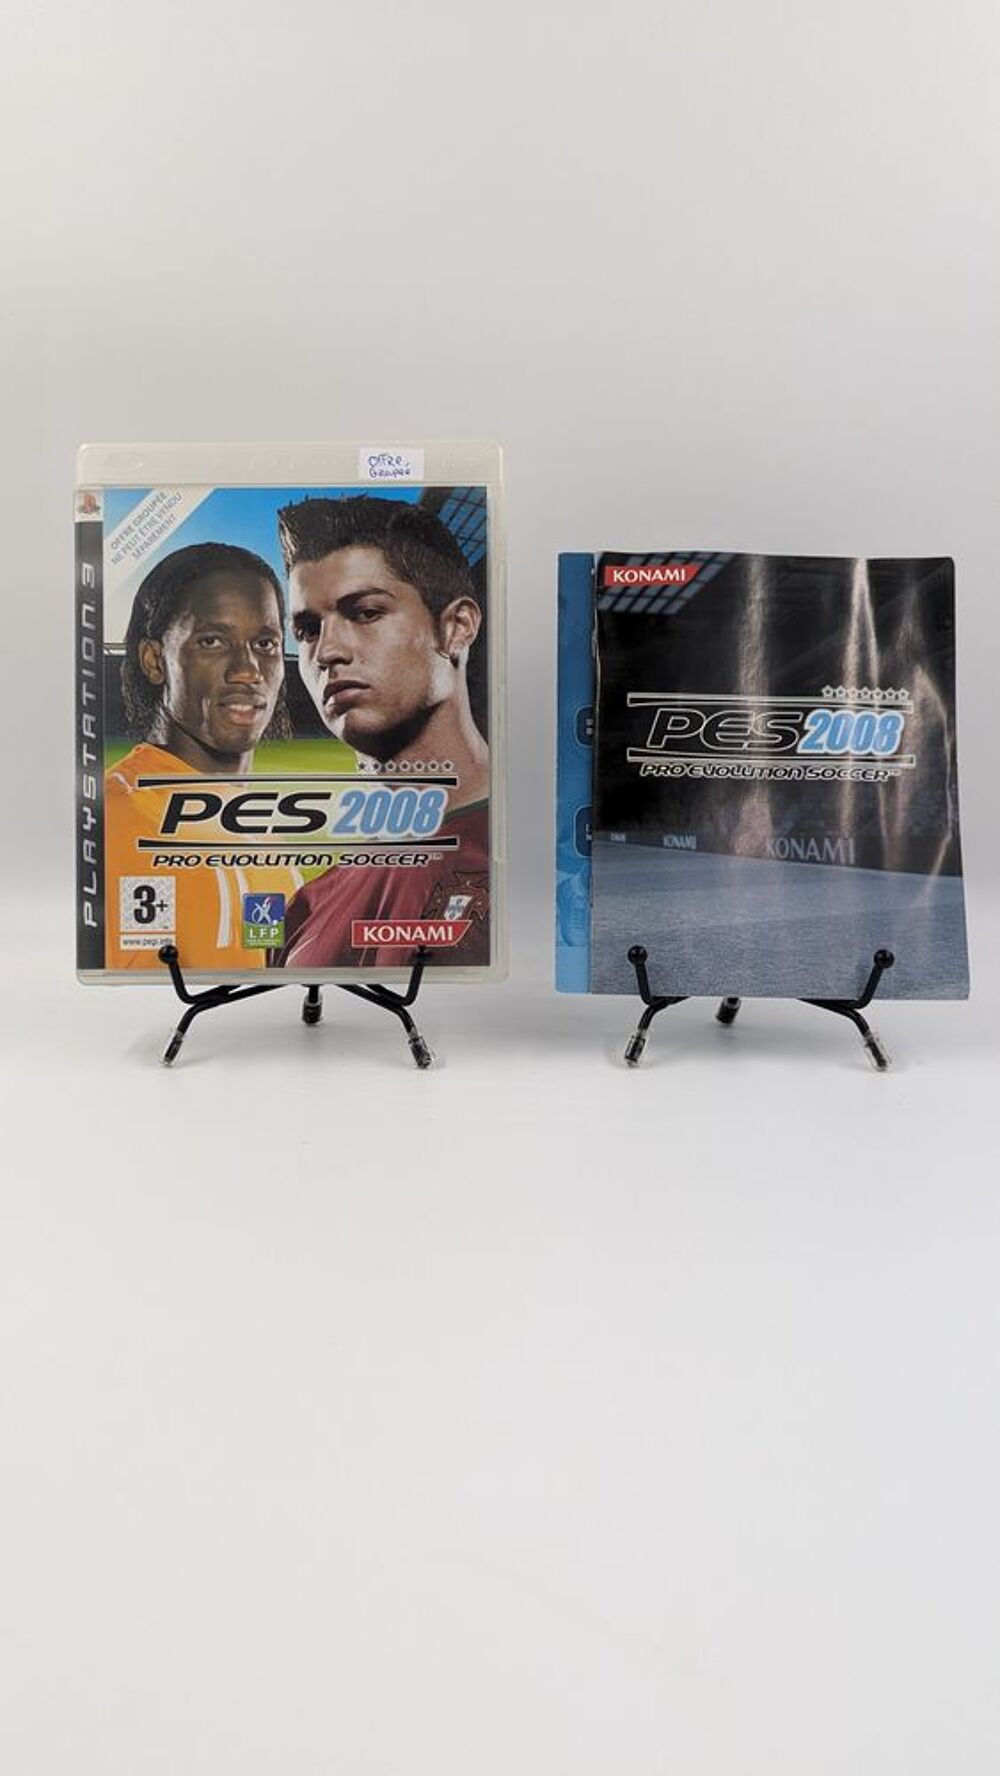 Jeu PS3 Playstation 3 Pro Evolution Soccer 2008 complet Consoles et jeux vidos